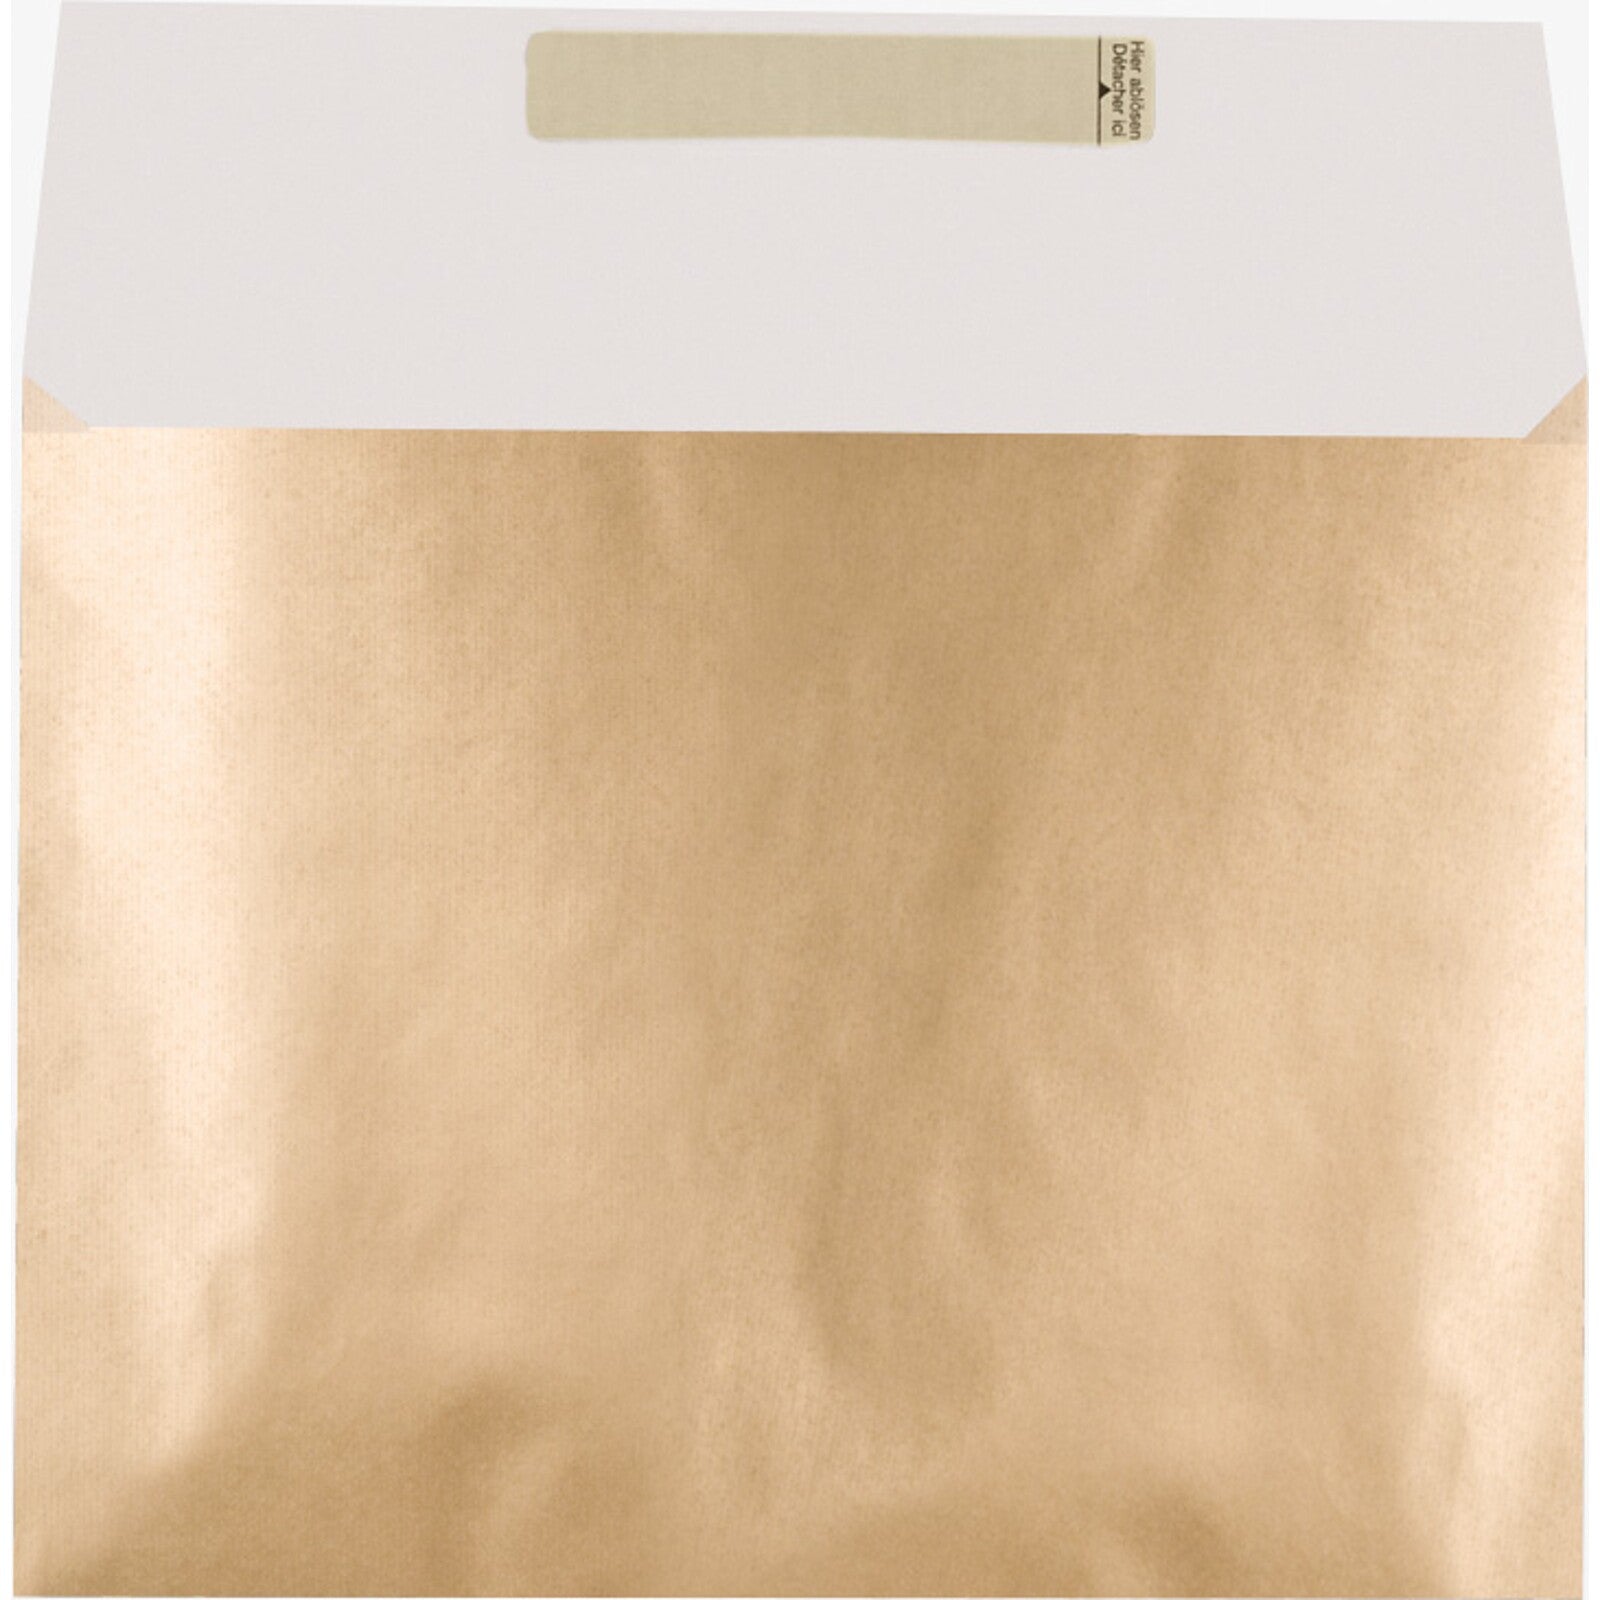 Gold Metallic Envelope Gift Bag by stewo at penny black